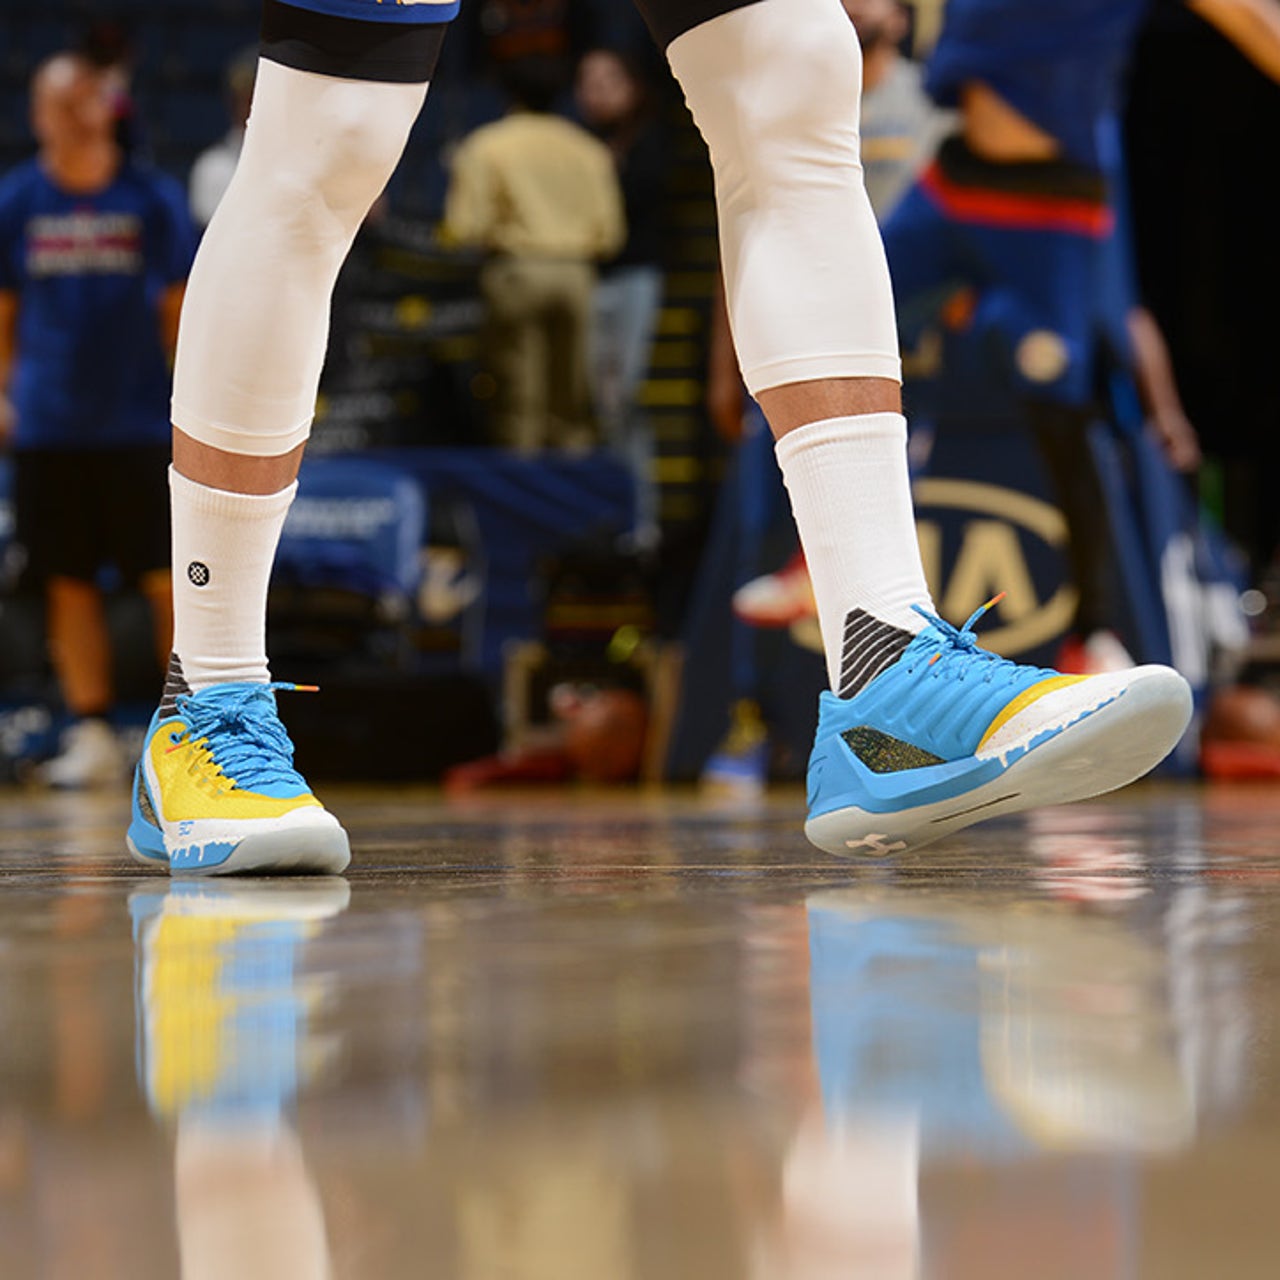 NBA Kicks: DeMar DeRozan Rocks Air Jordan 17, Chris Paul Wears